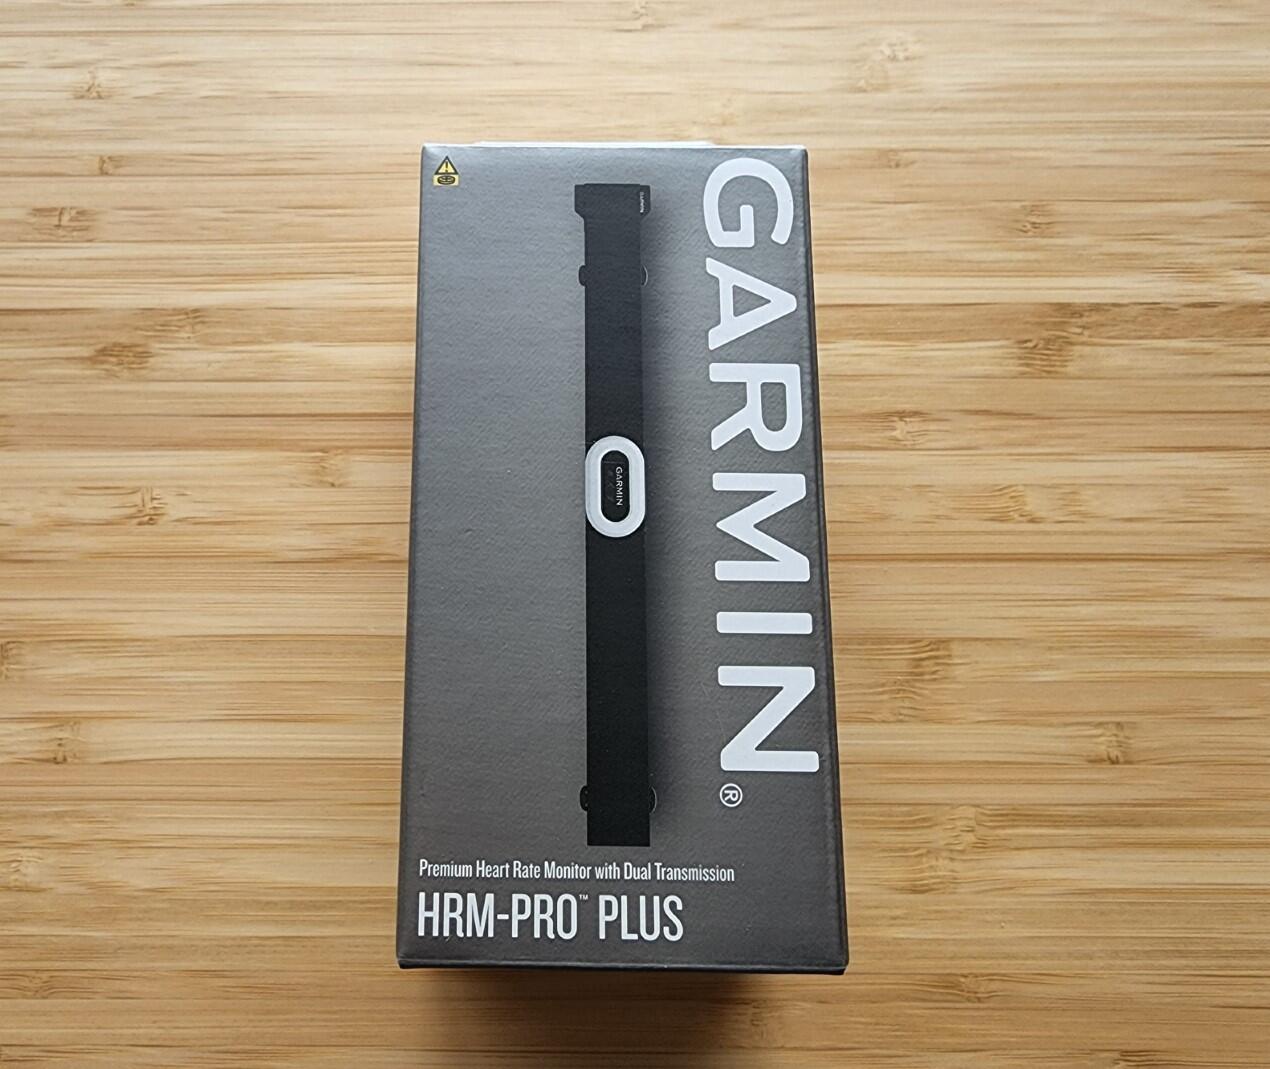 Garmin Plus review: One very handy update, price | ZDNET